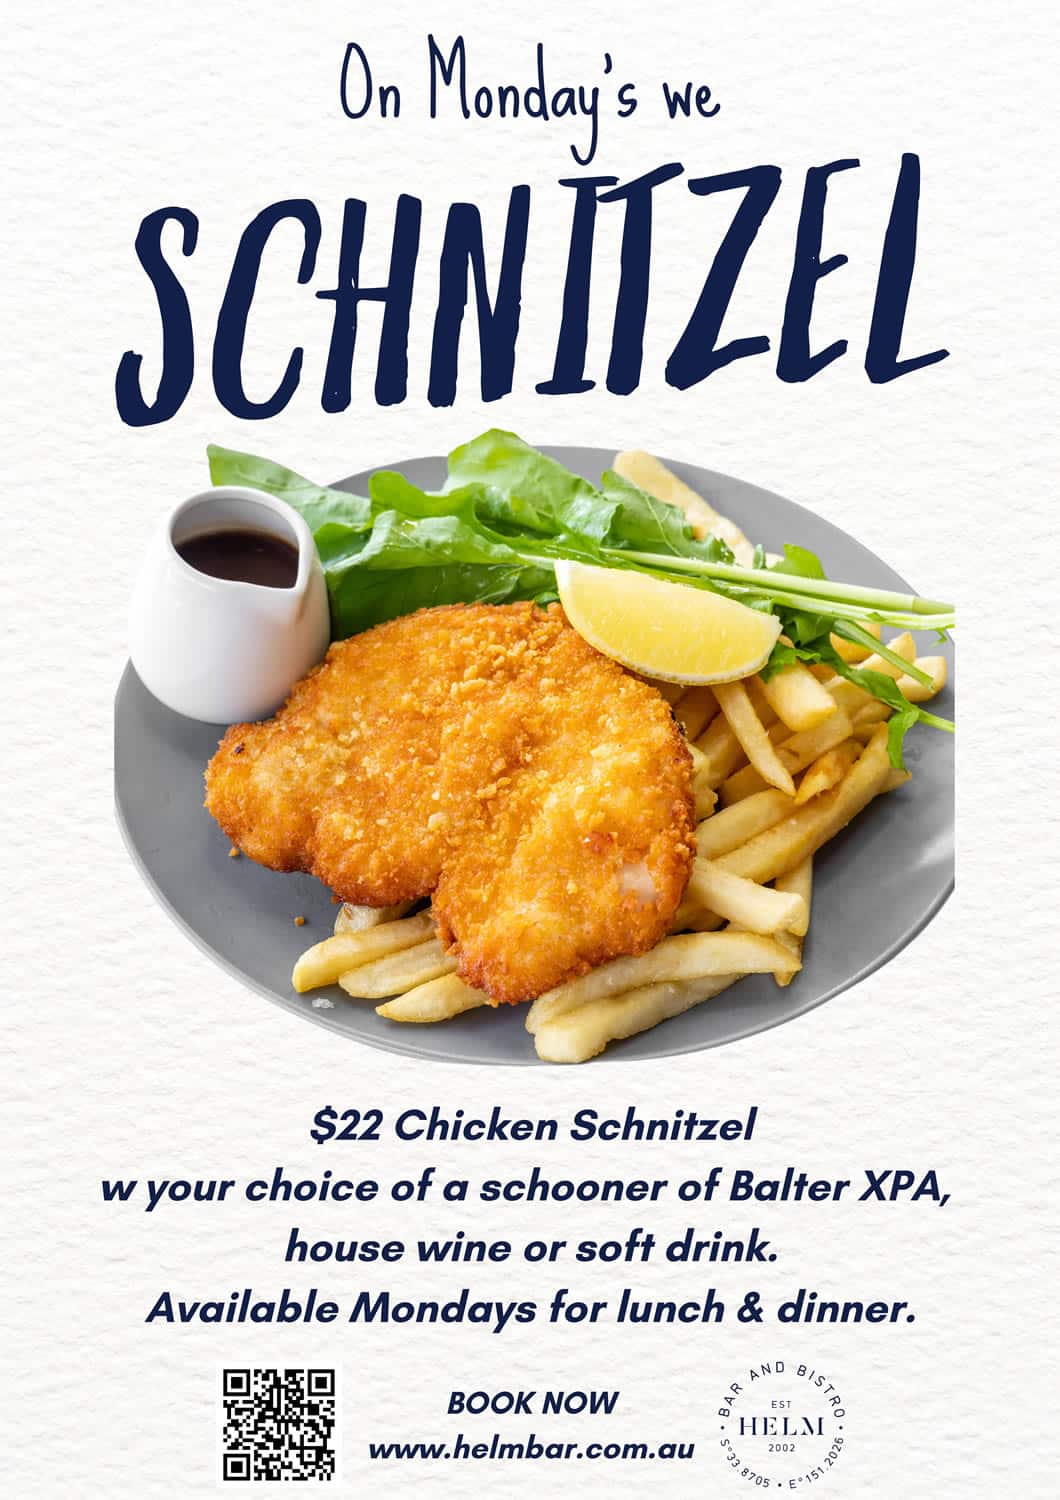 Cheap eats Darling Harbour - Chicken Schnitzel Mondays for $22.